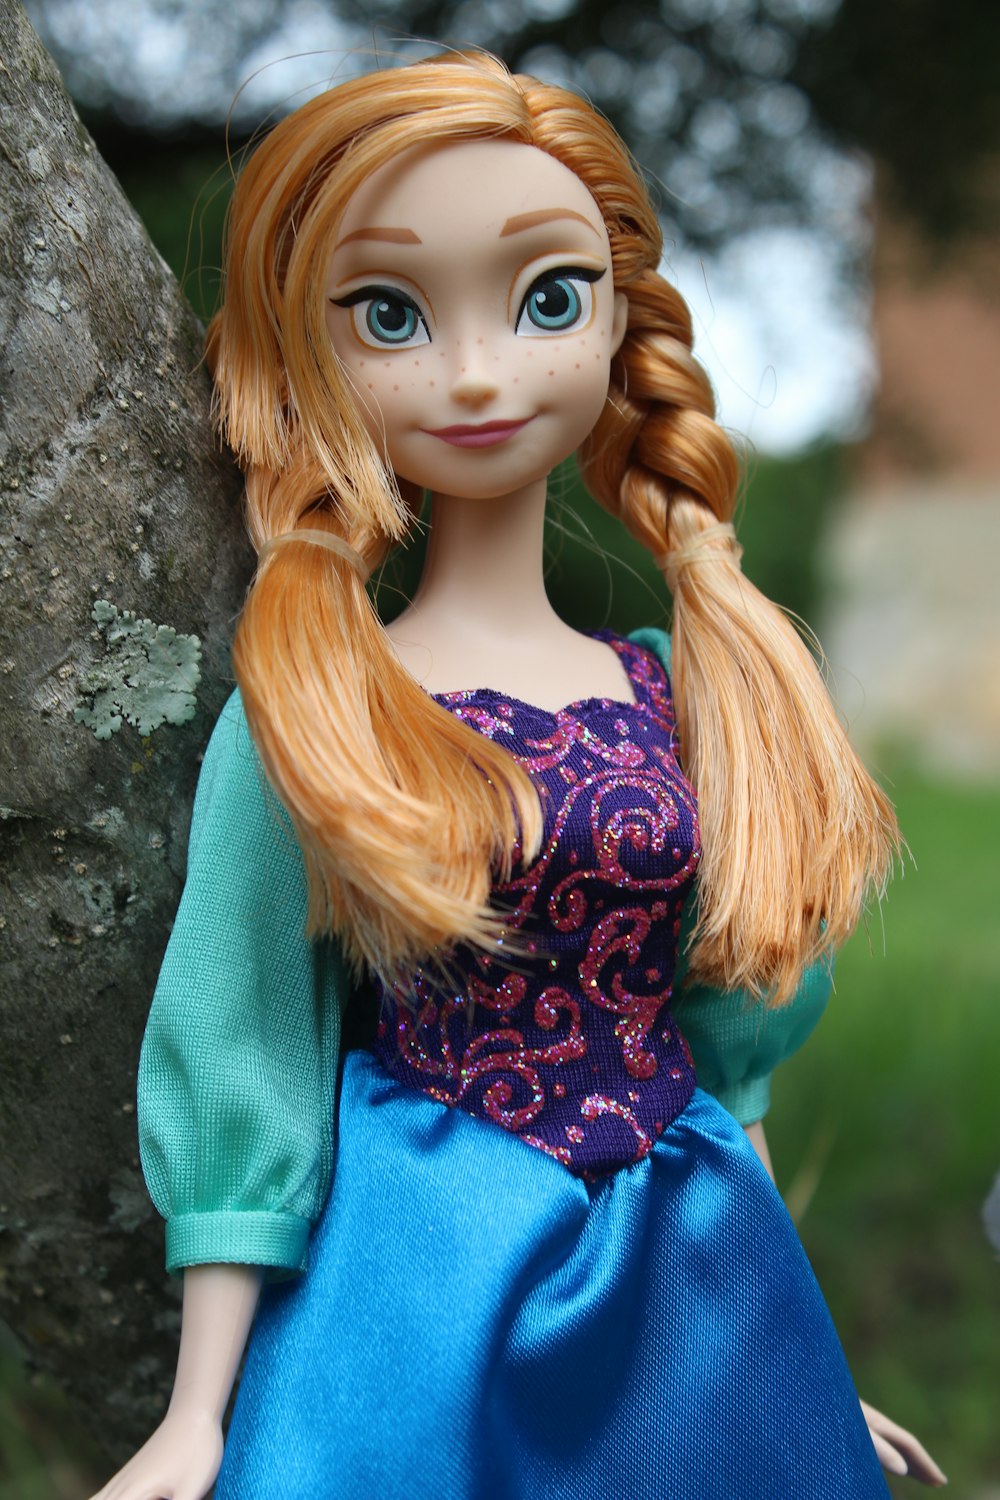 Frozen princess anna doll photo – Free Toy Image on Unsplash